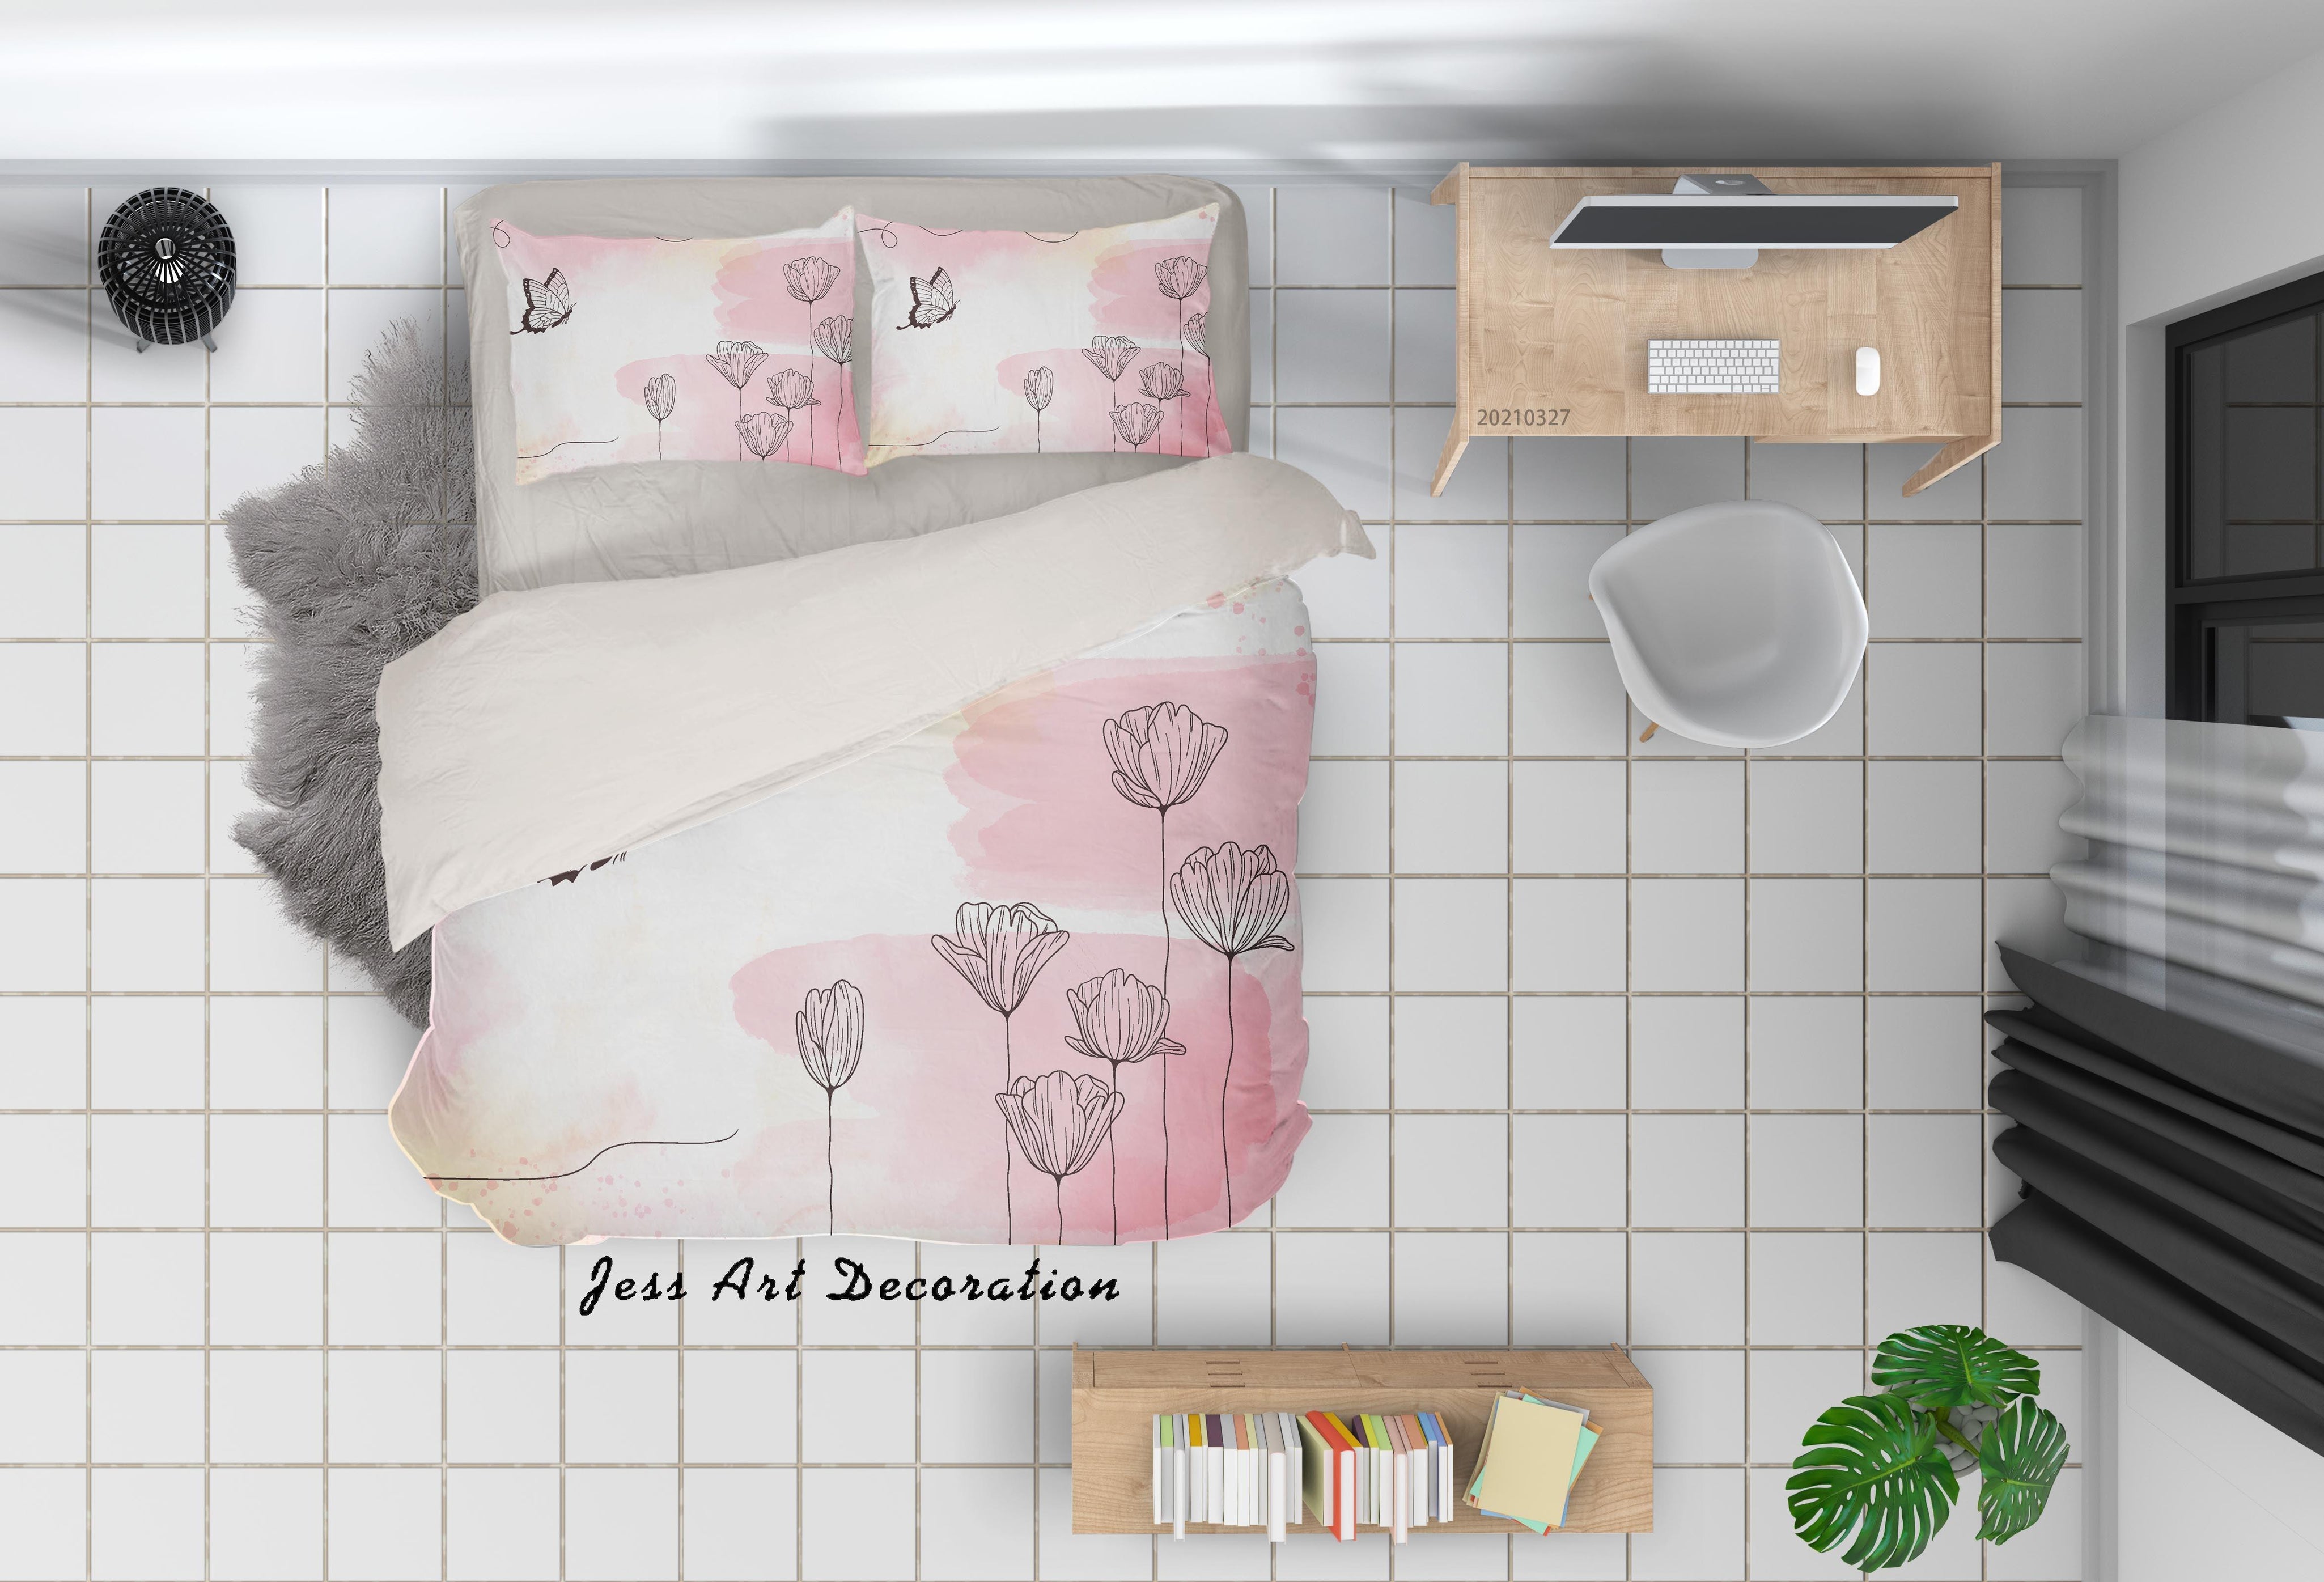 3D Watercolor Pink Floral Butterfly Quilt Cover Set Bedding Set Duvet Cover Pillowcases 15- Jess Art Decoration